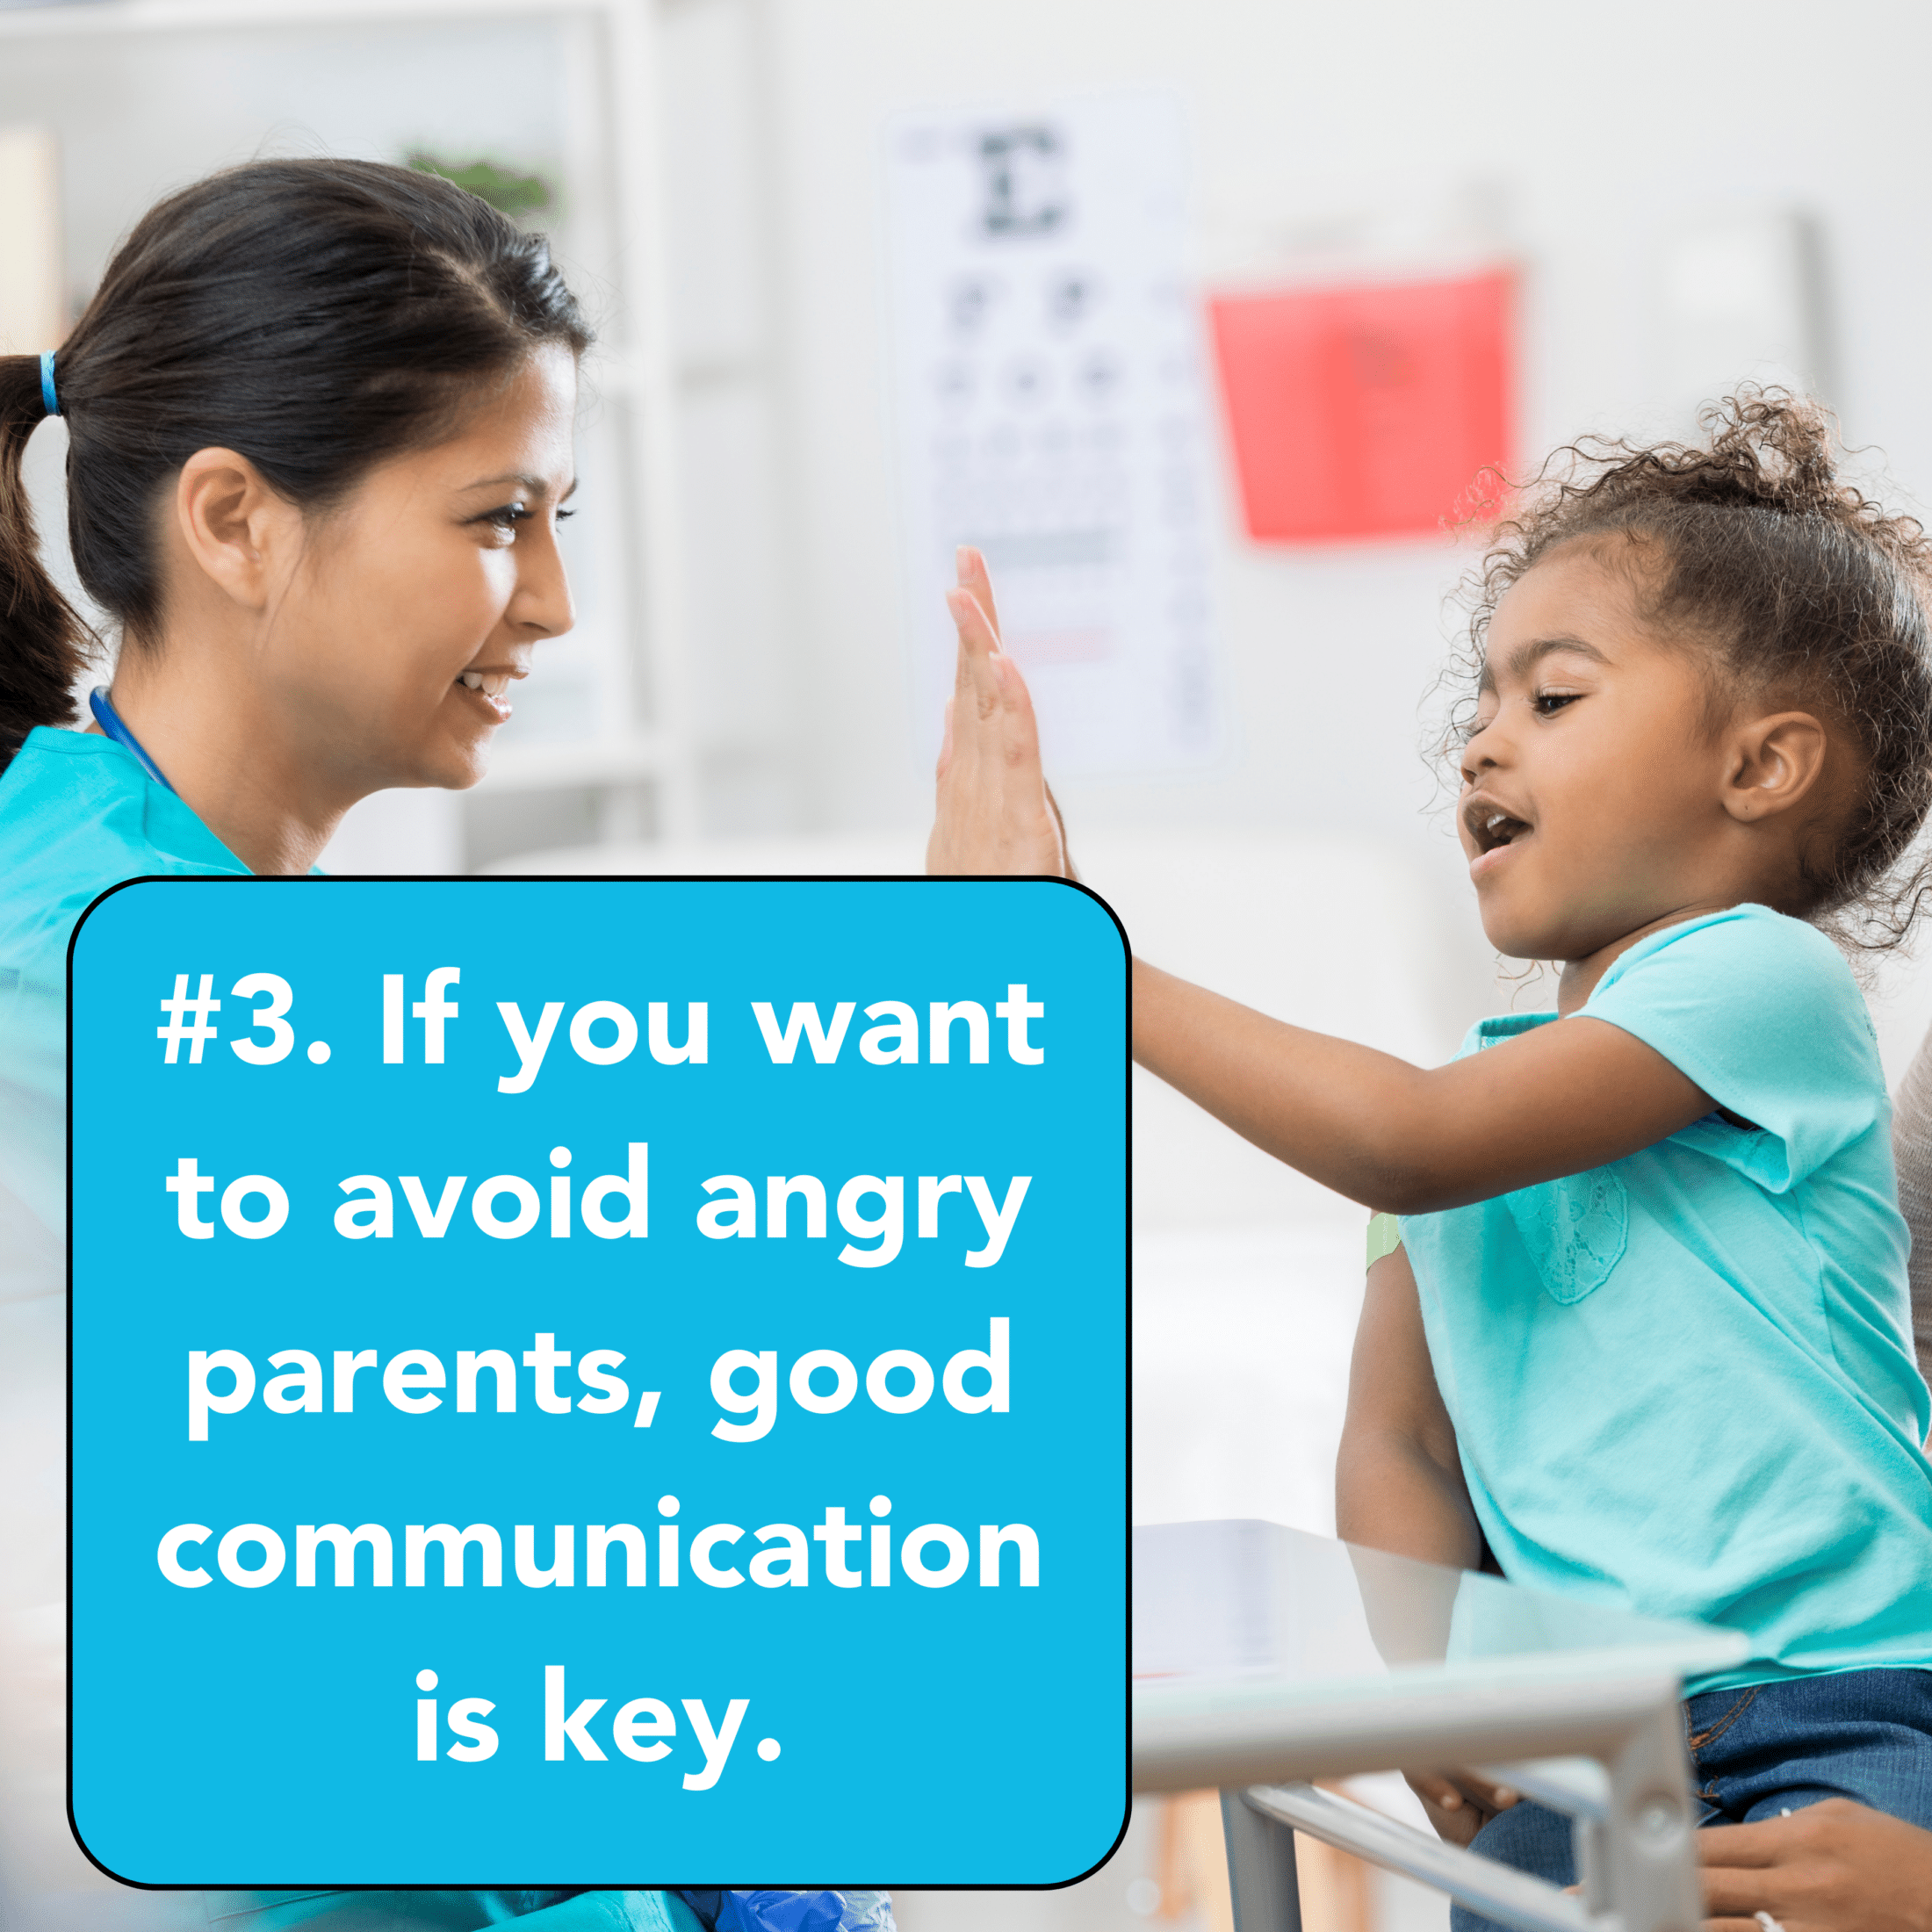 Pediatrics - Good communication is key for parents